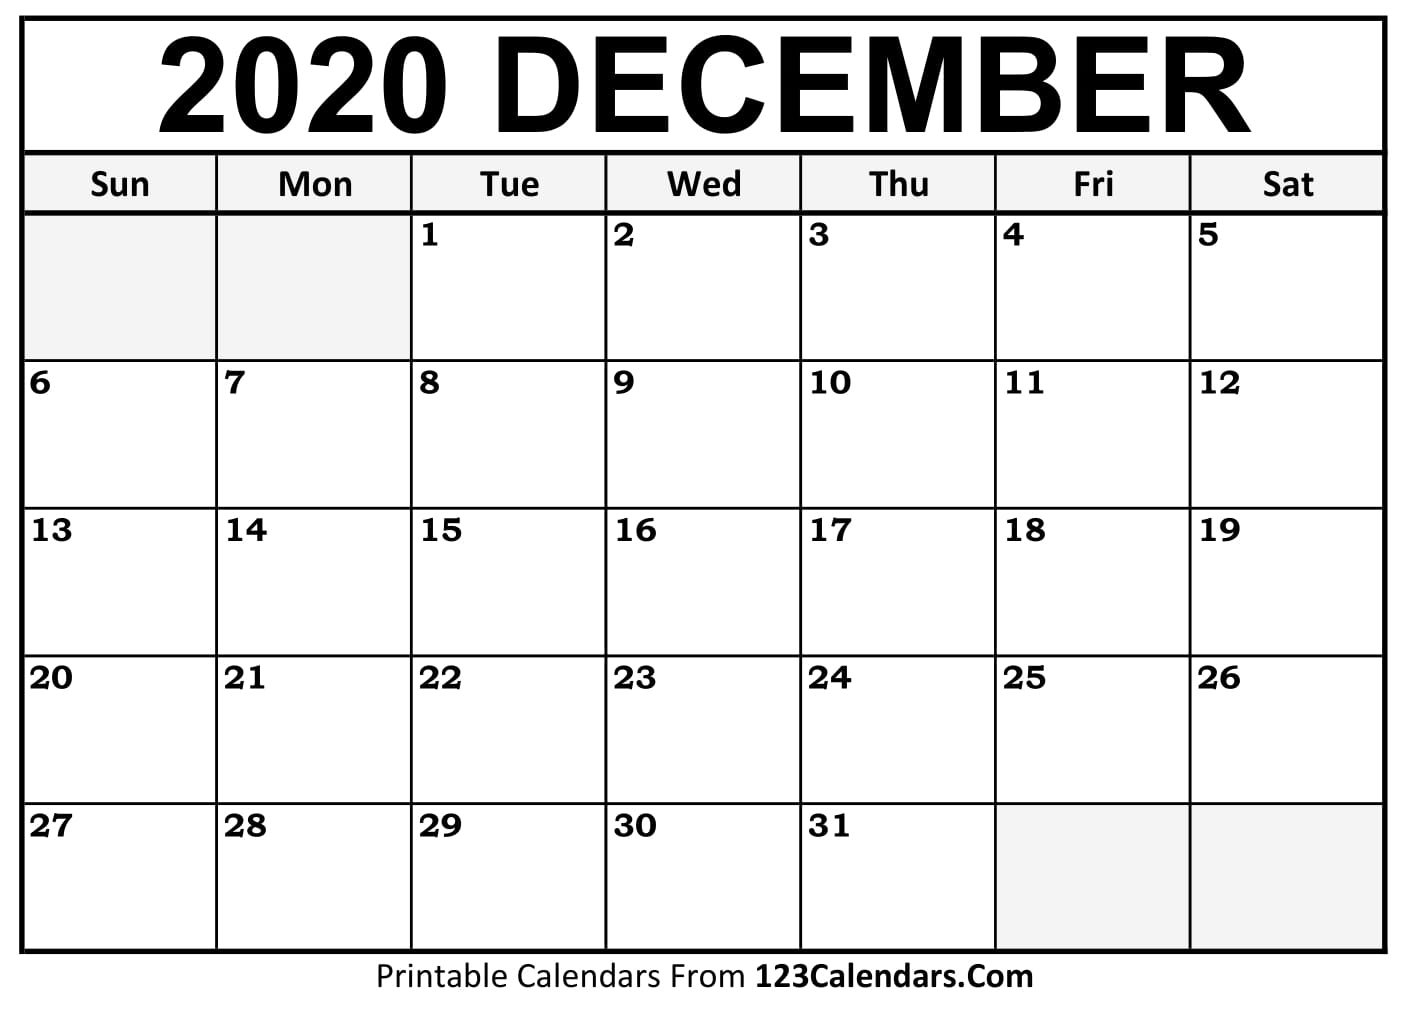 printable-december-2020-calendar-templates-123calendars